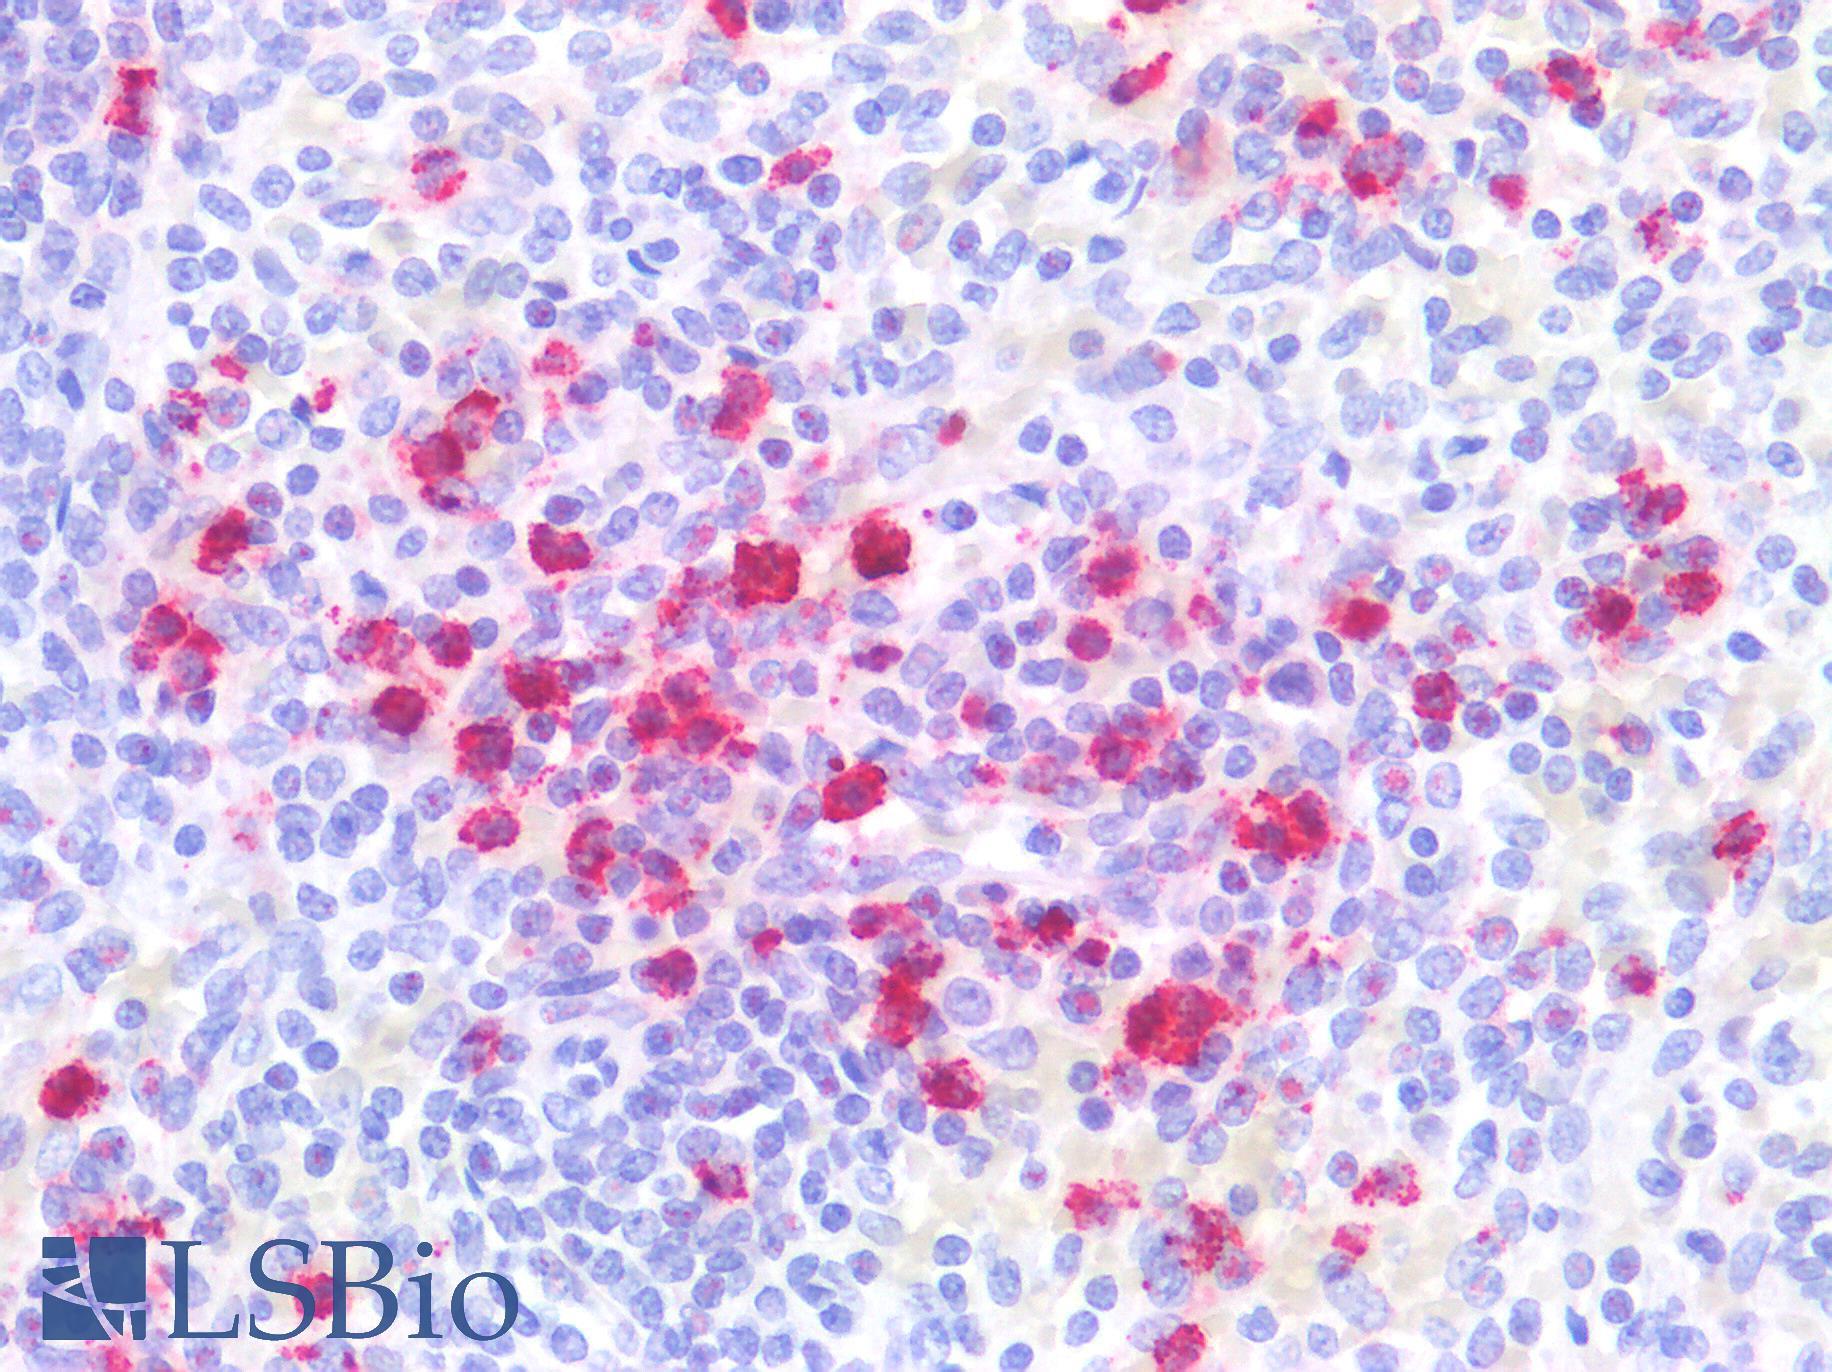 CTSG / Cathepsin G Antibody - Human Spleen: Formalin-Fixed, Paraffin-Embedded (FFPE)